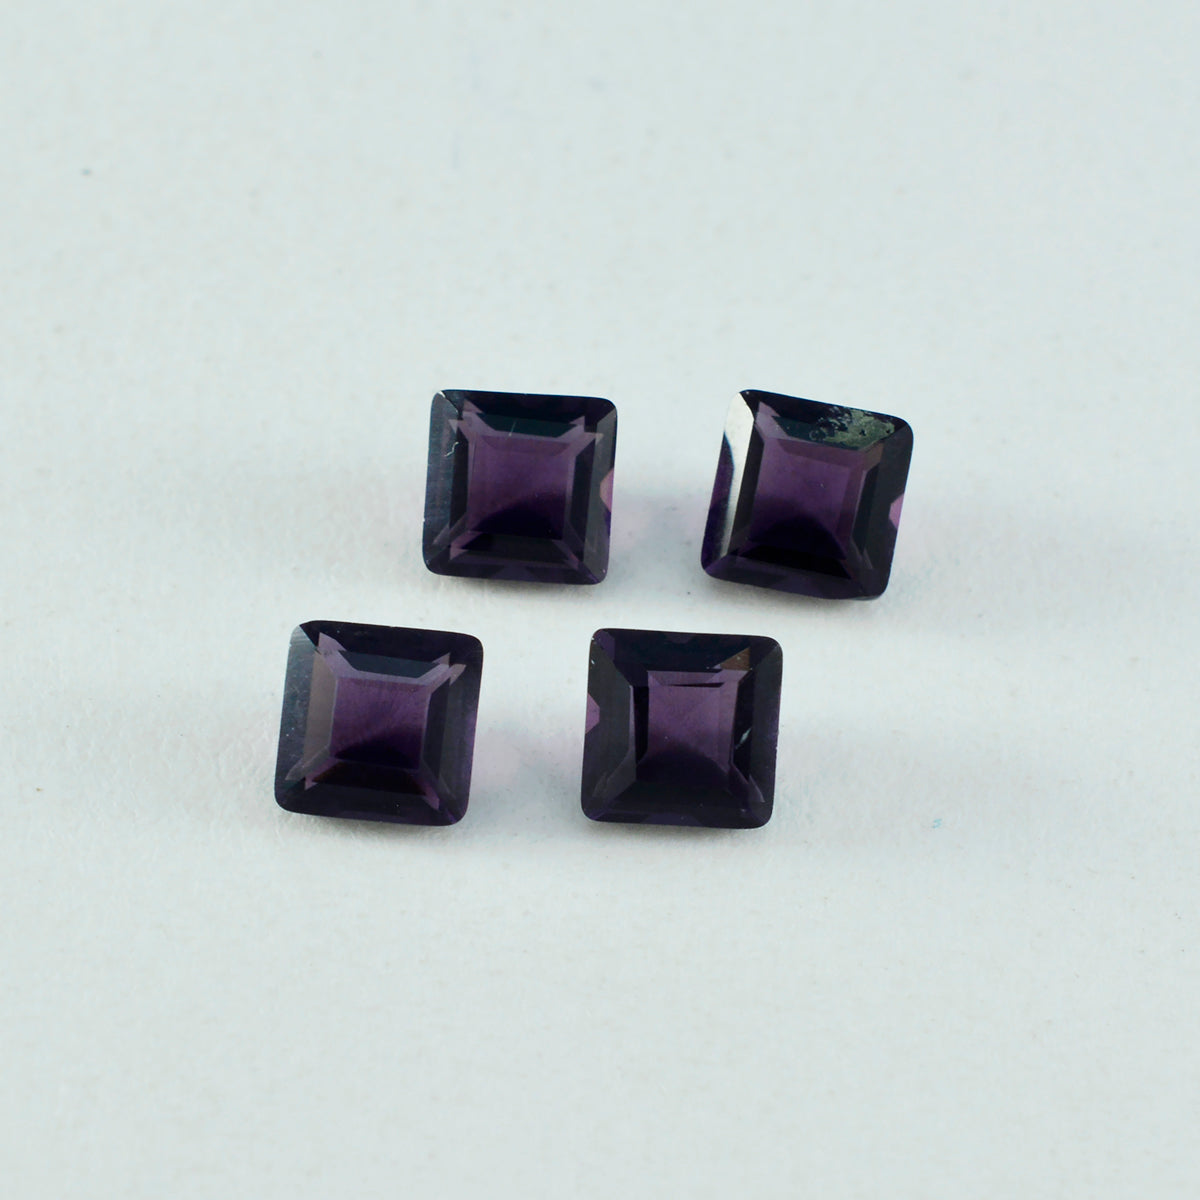 Riyogems 1PC Purple Amethyst CZ Faceted 9x9 mm Square Shape beauty Quality Loose Gem